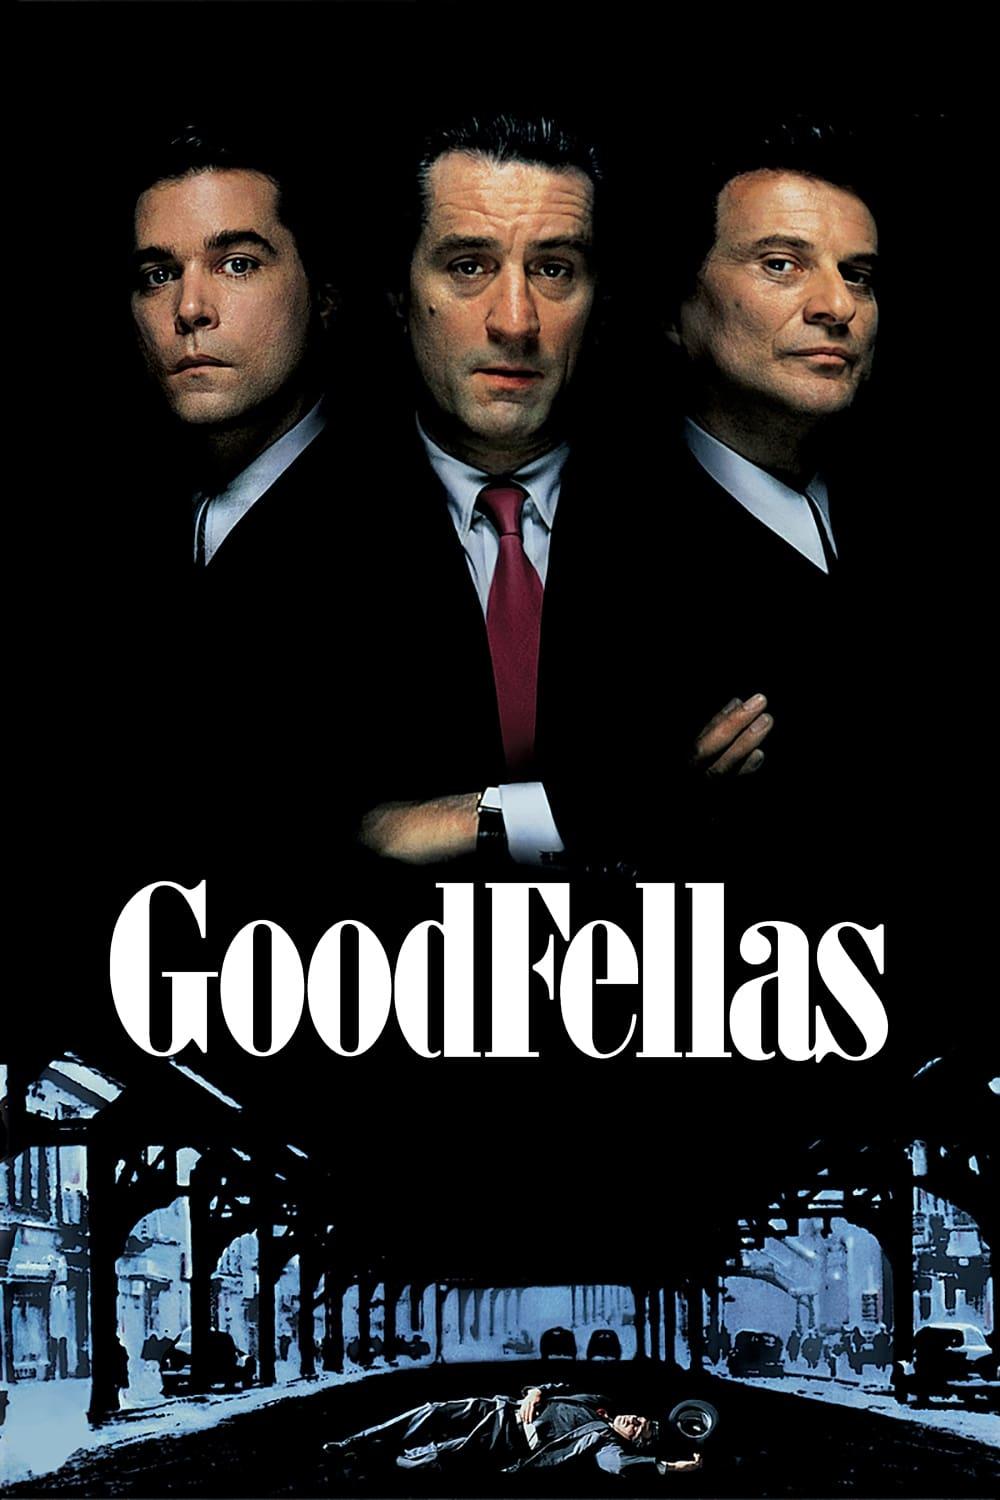 Movie poster of "GoodFellas"